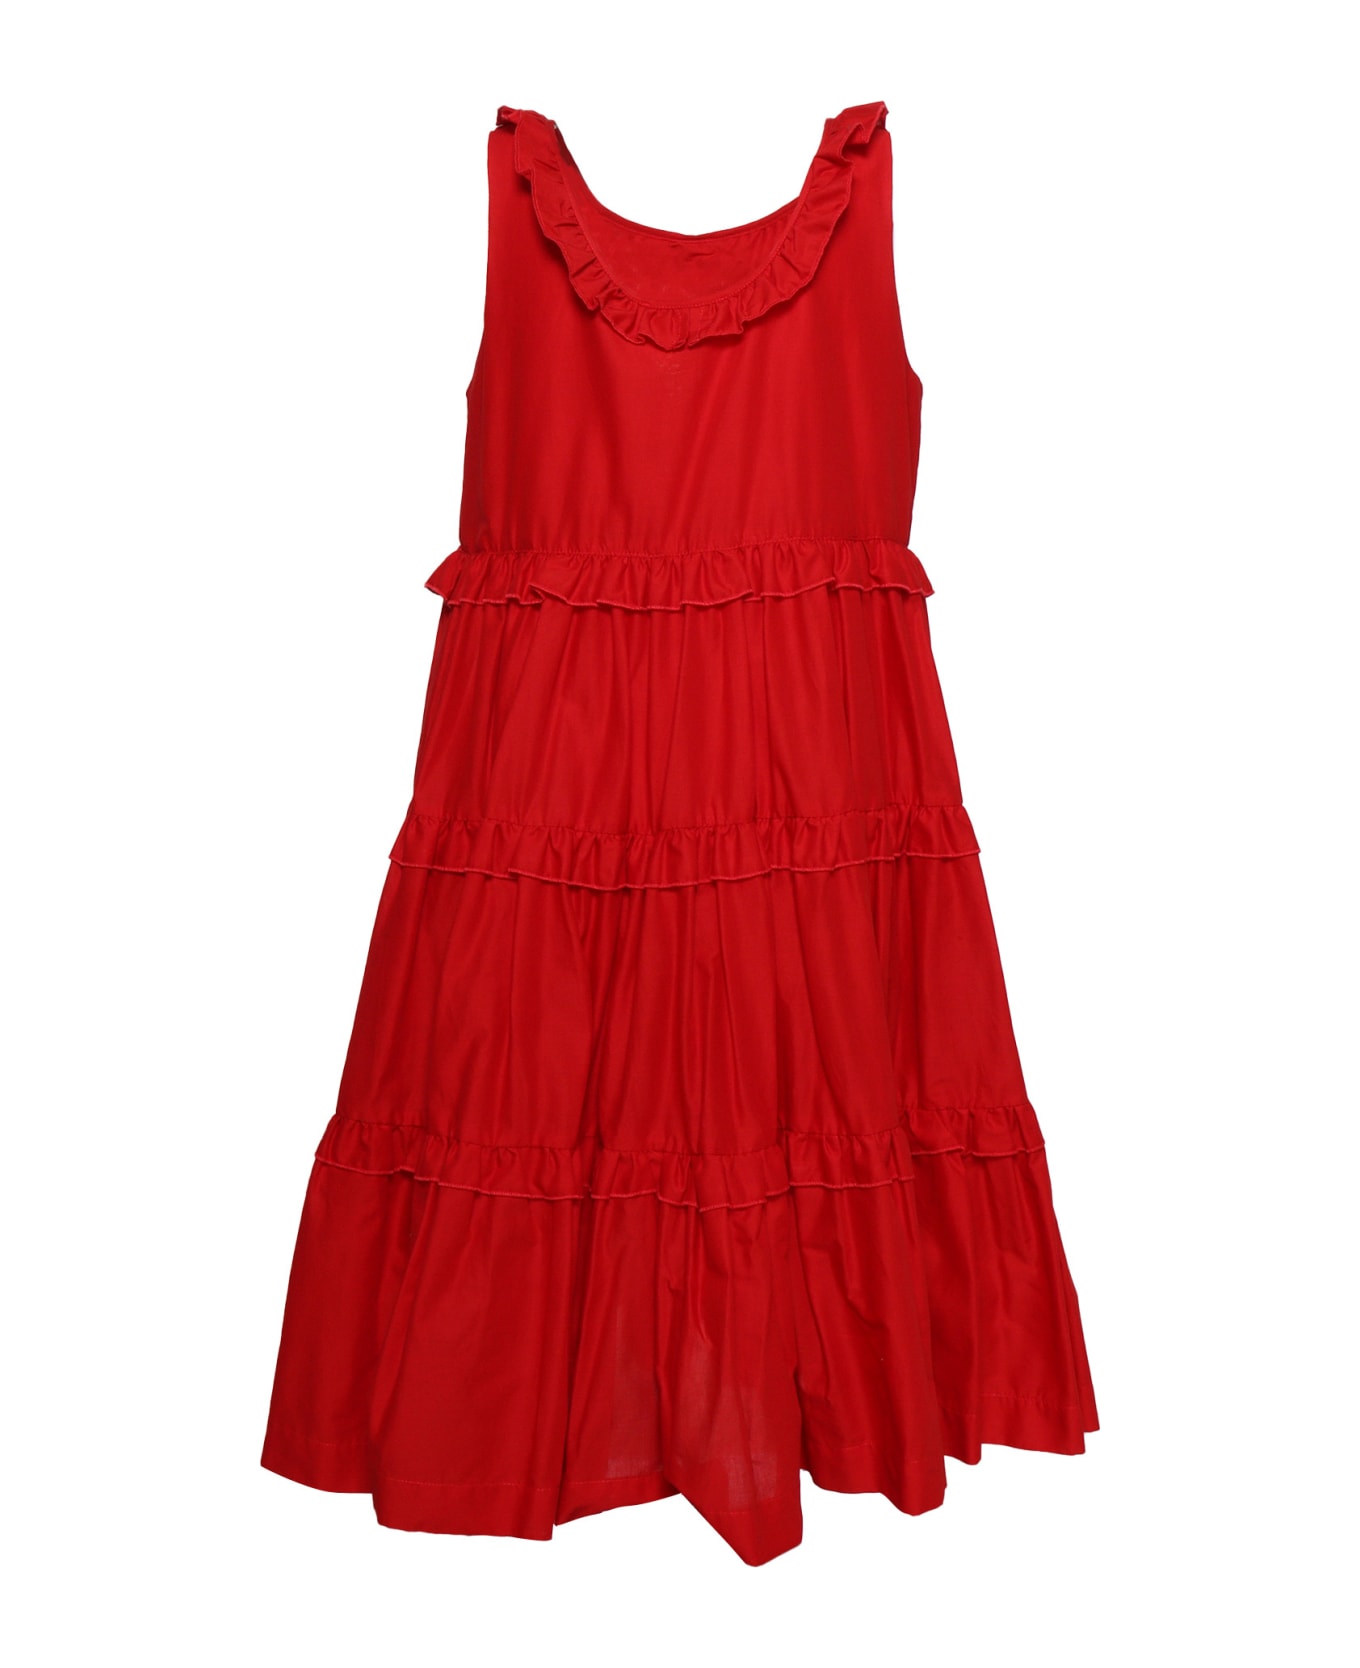 Monnalisa Flared Flounced Dress - RED